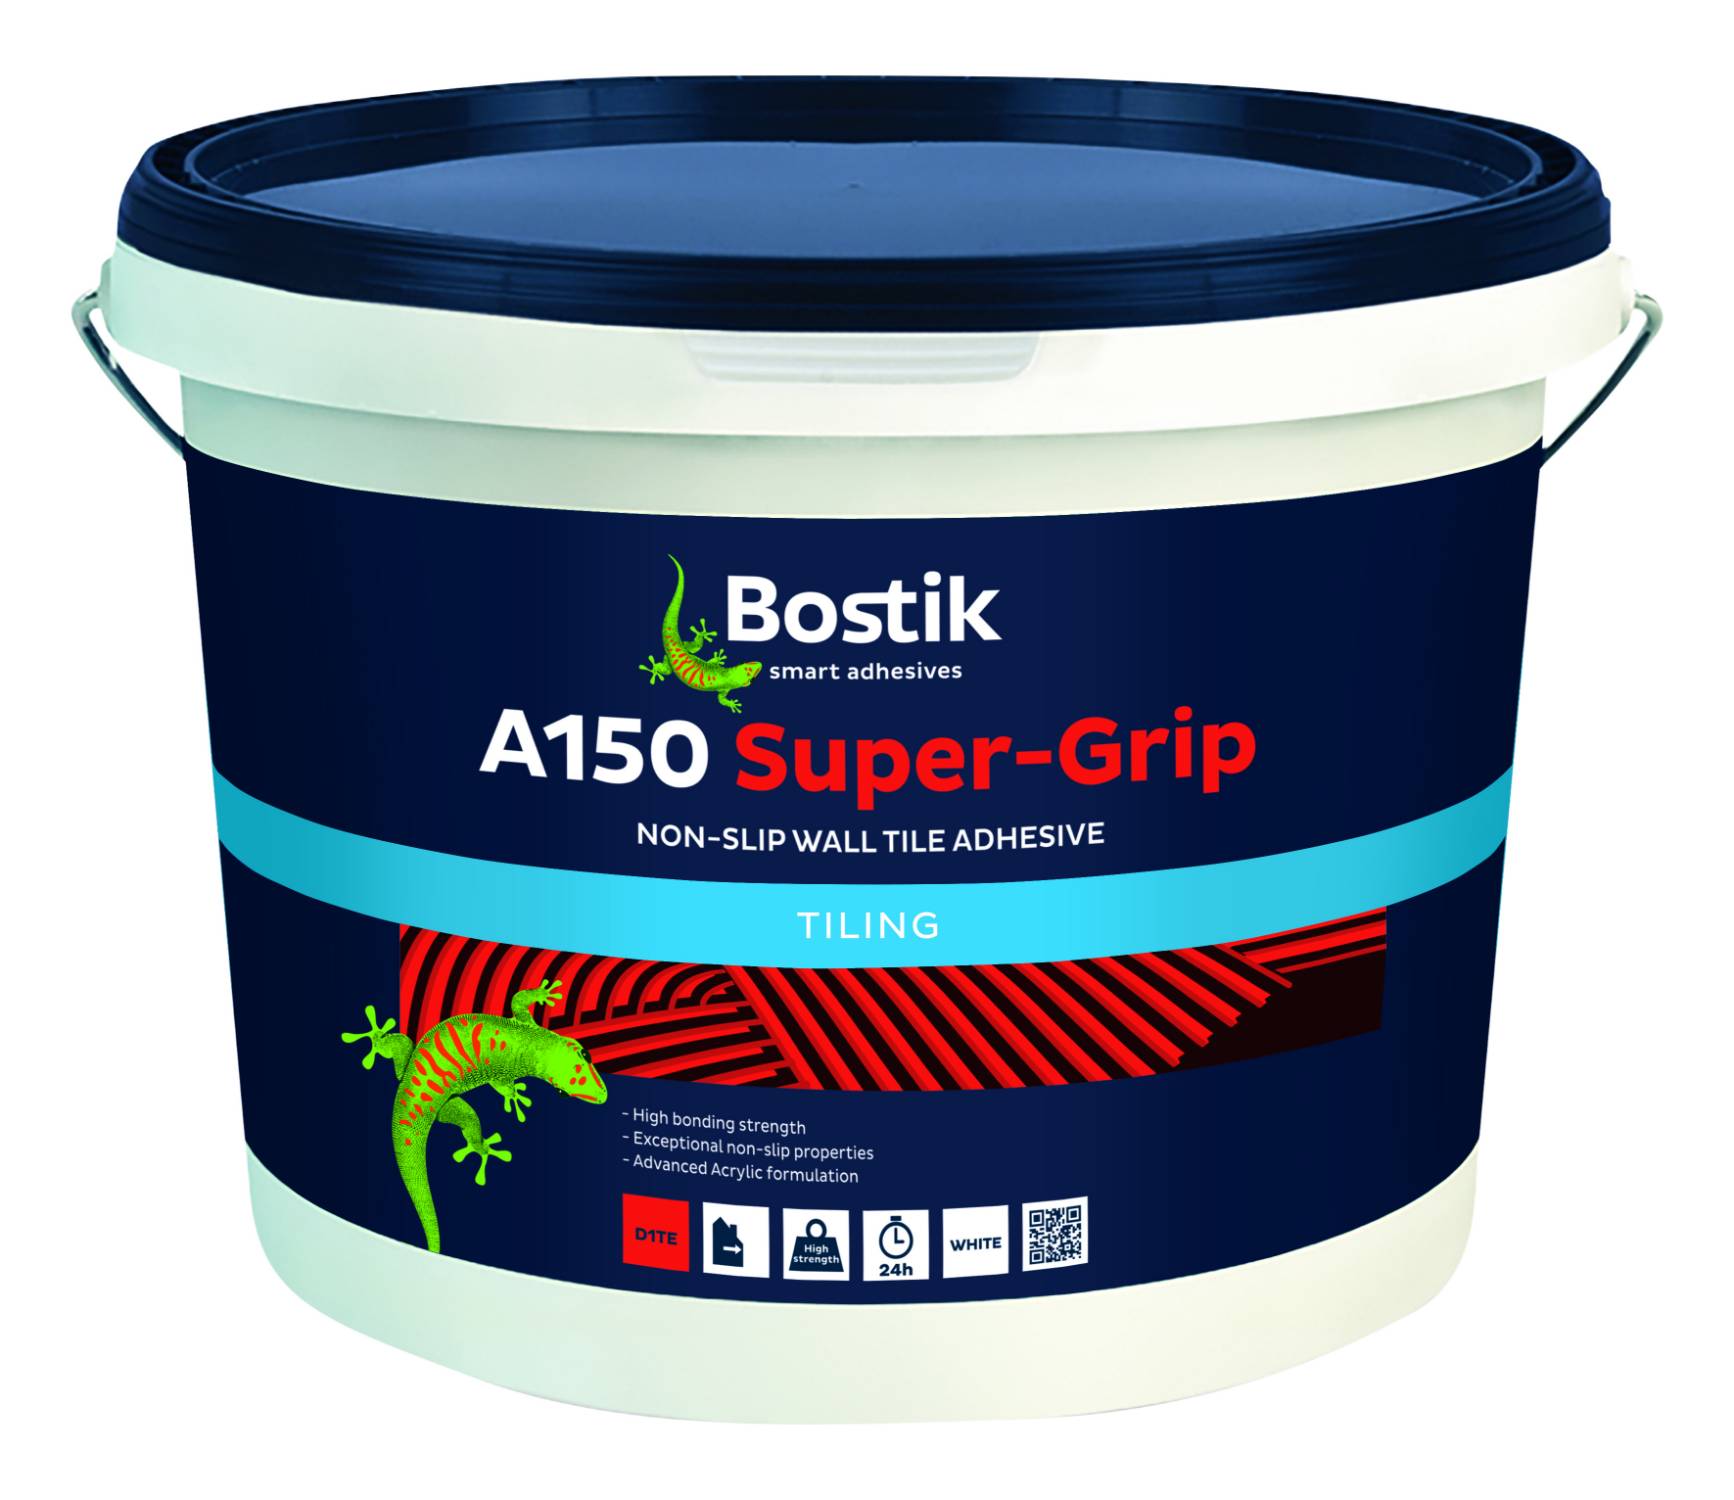 Bostik A150 Supergrip Tiling Adhesive - Tile glue